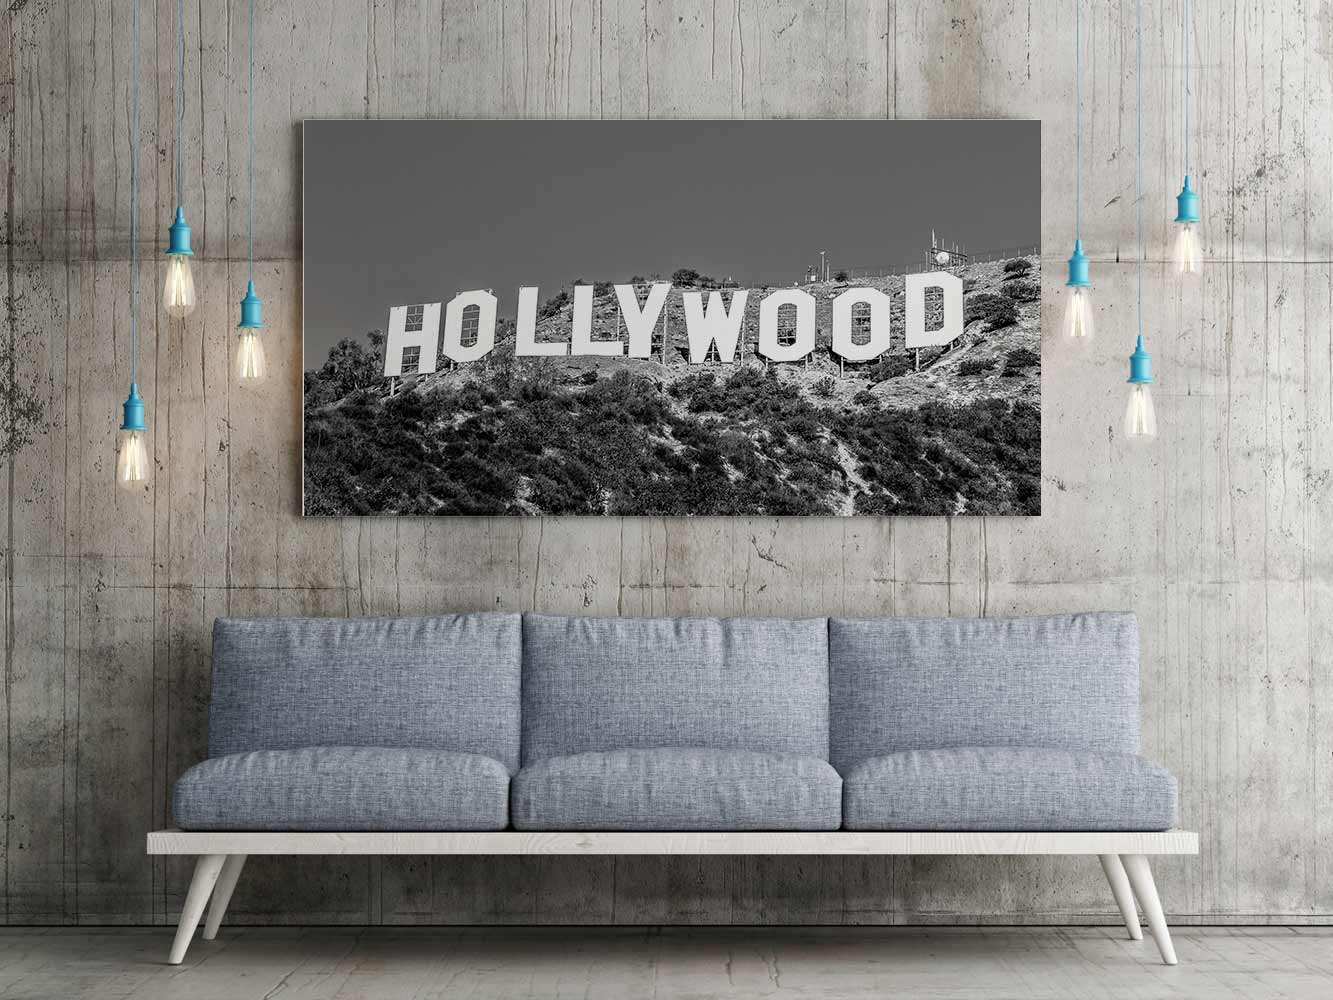 Fotocuadro Vintage Cartel Hollywood | Carteles XXL - Impresión carteleria publicitaria